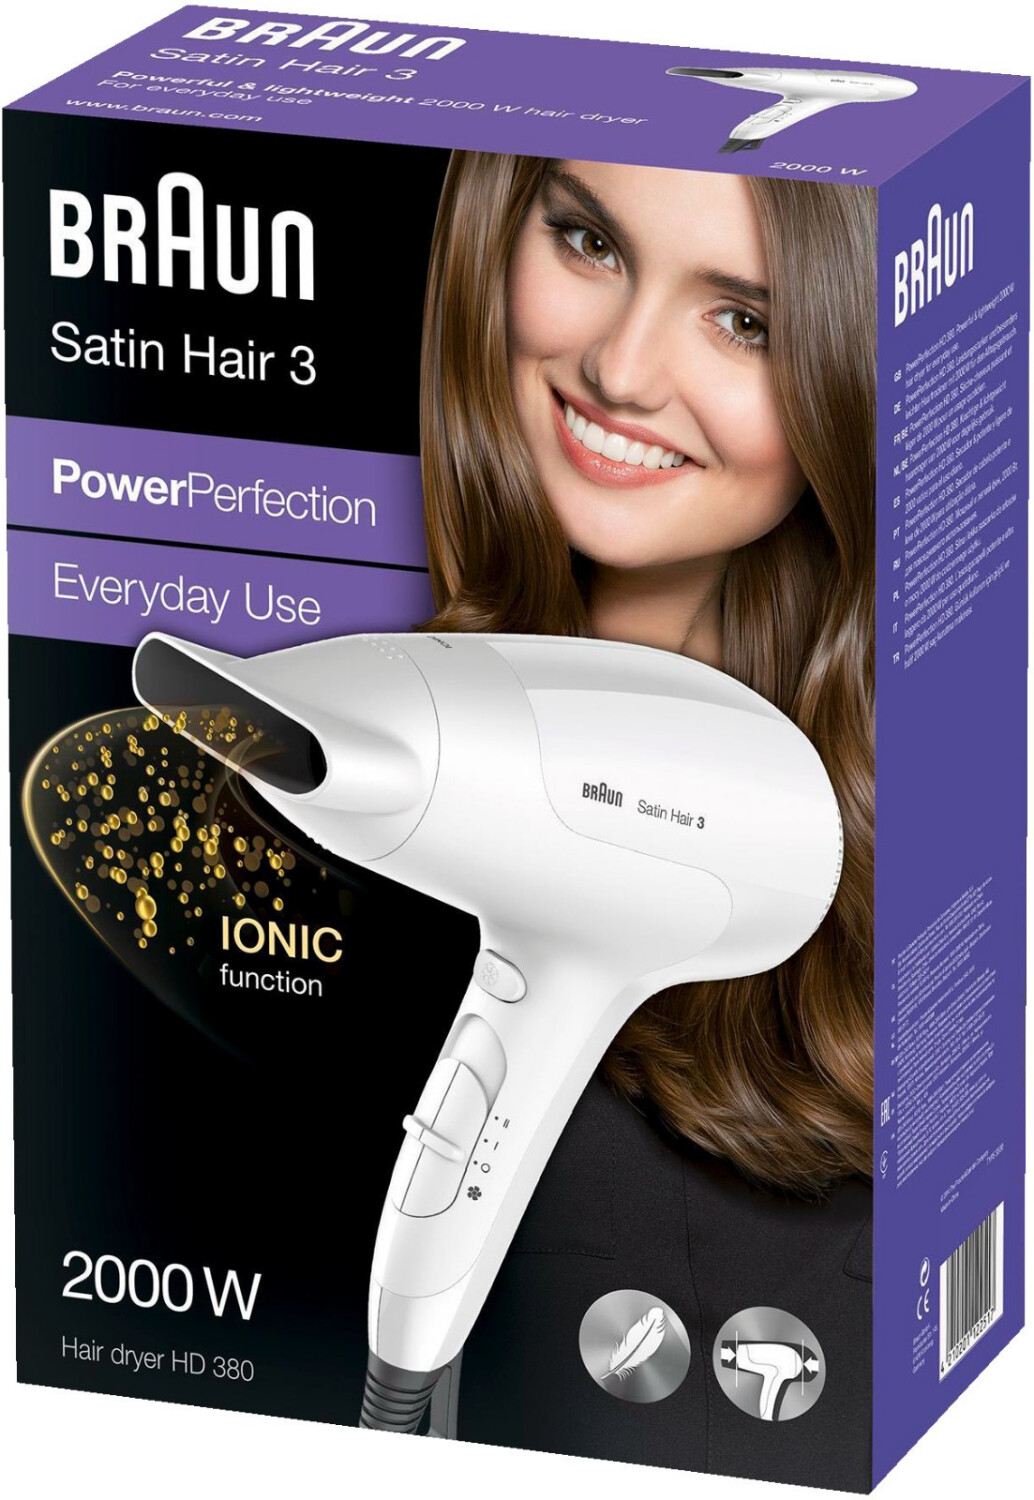 Braun Satin Hair 3 HD 380 PowerPerfection ab 34,99 € | Preisvergleich bei